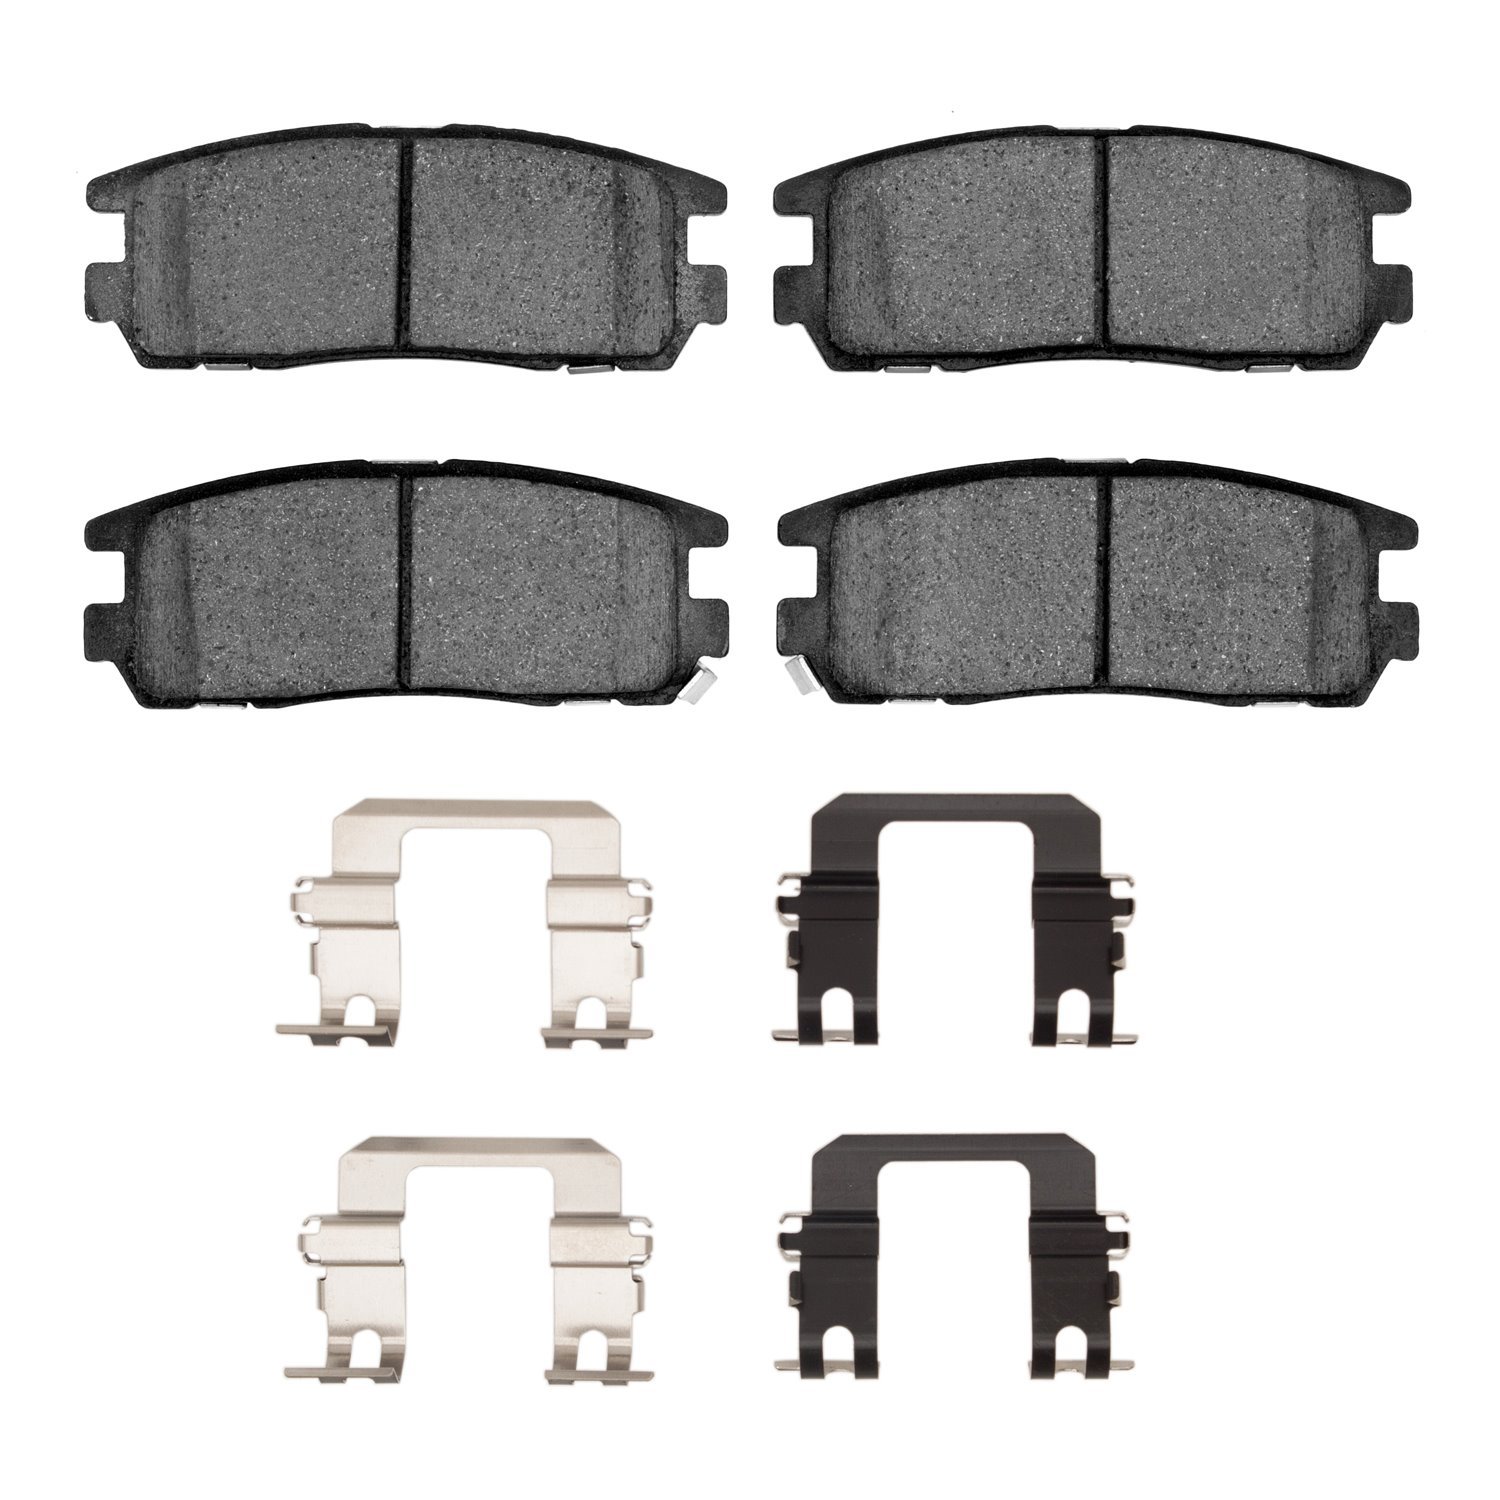 Ceramic Brake Pads & Hardware Kit, 1992-2004 Fits Multiple Makes/Models, Position: Rear